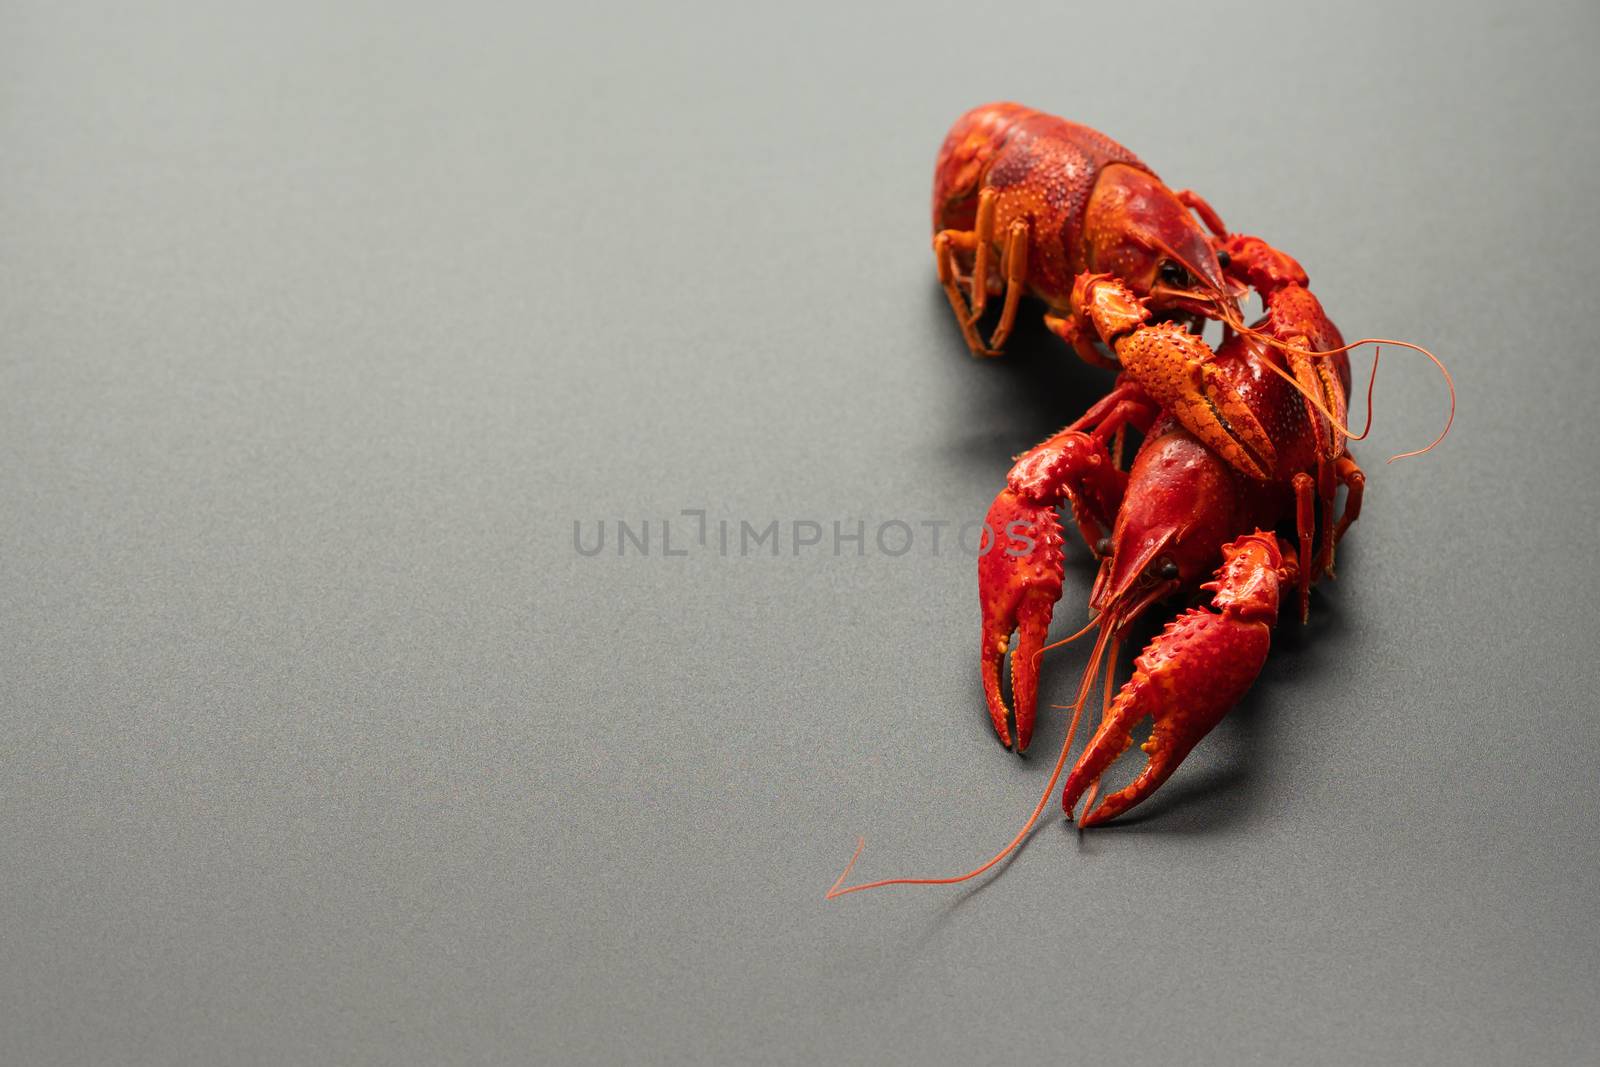 Crayfish red, Baby Lobster portrait on black background